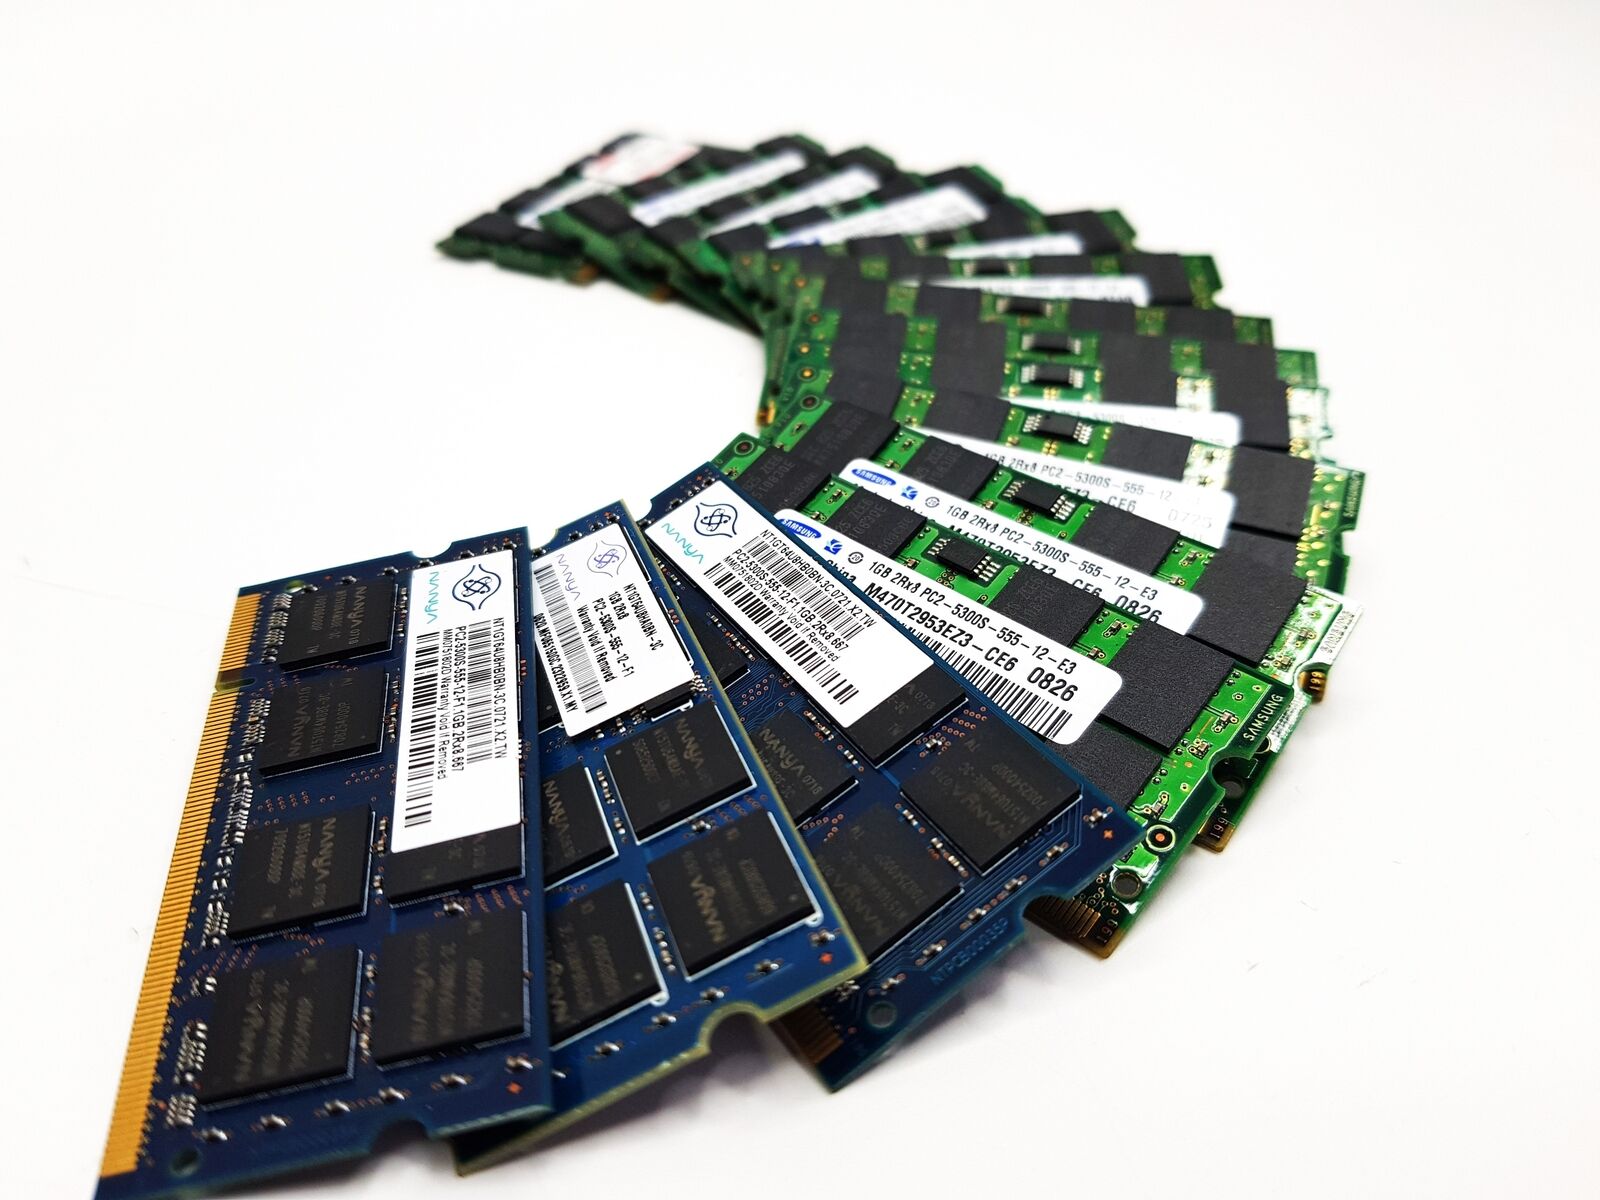 LOT of (15) Mix SODIMM Memory1GB PC2-5300S-555 DDR2-667MHz 200pin Samsung/Nanya